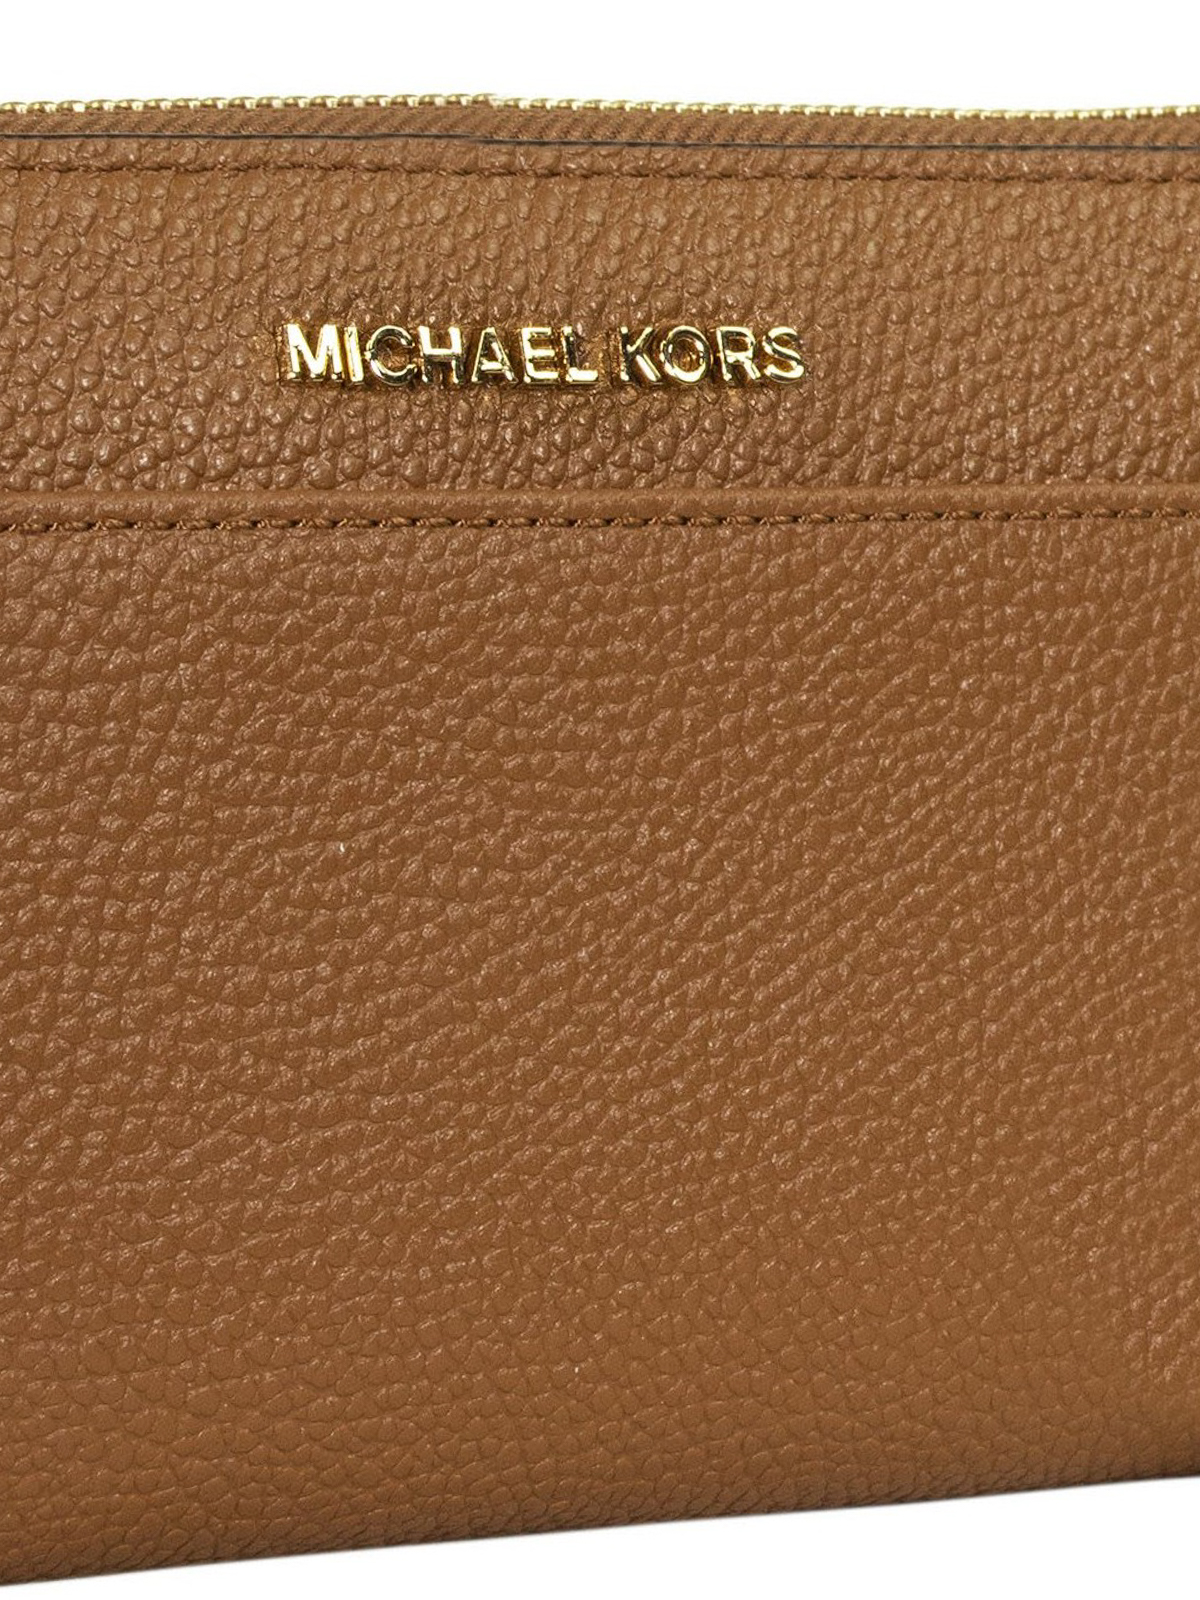 michael kors acorn wallet